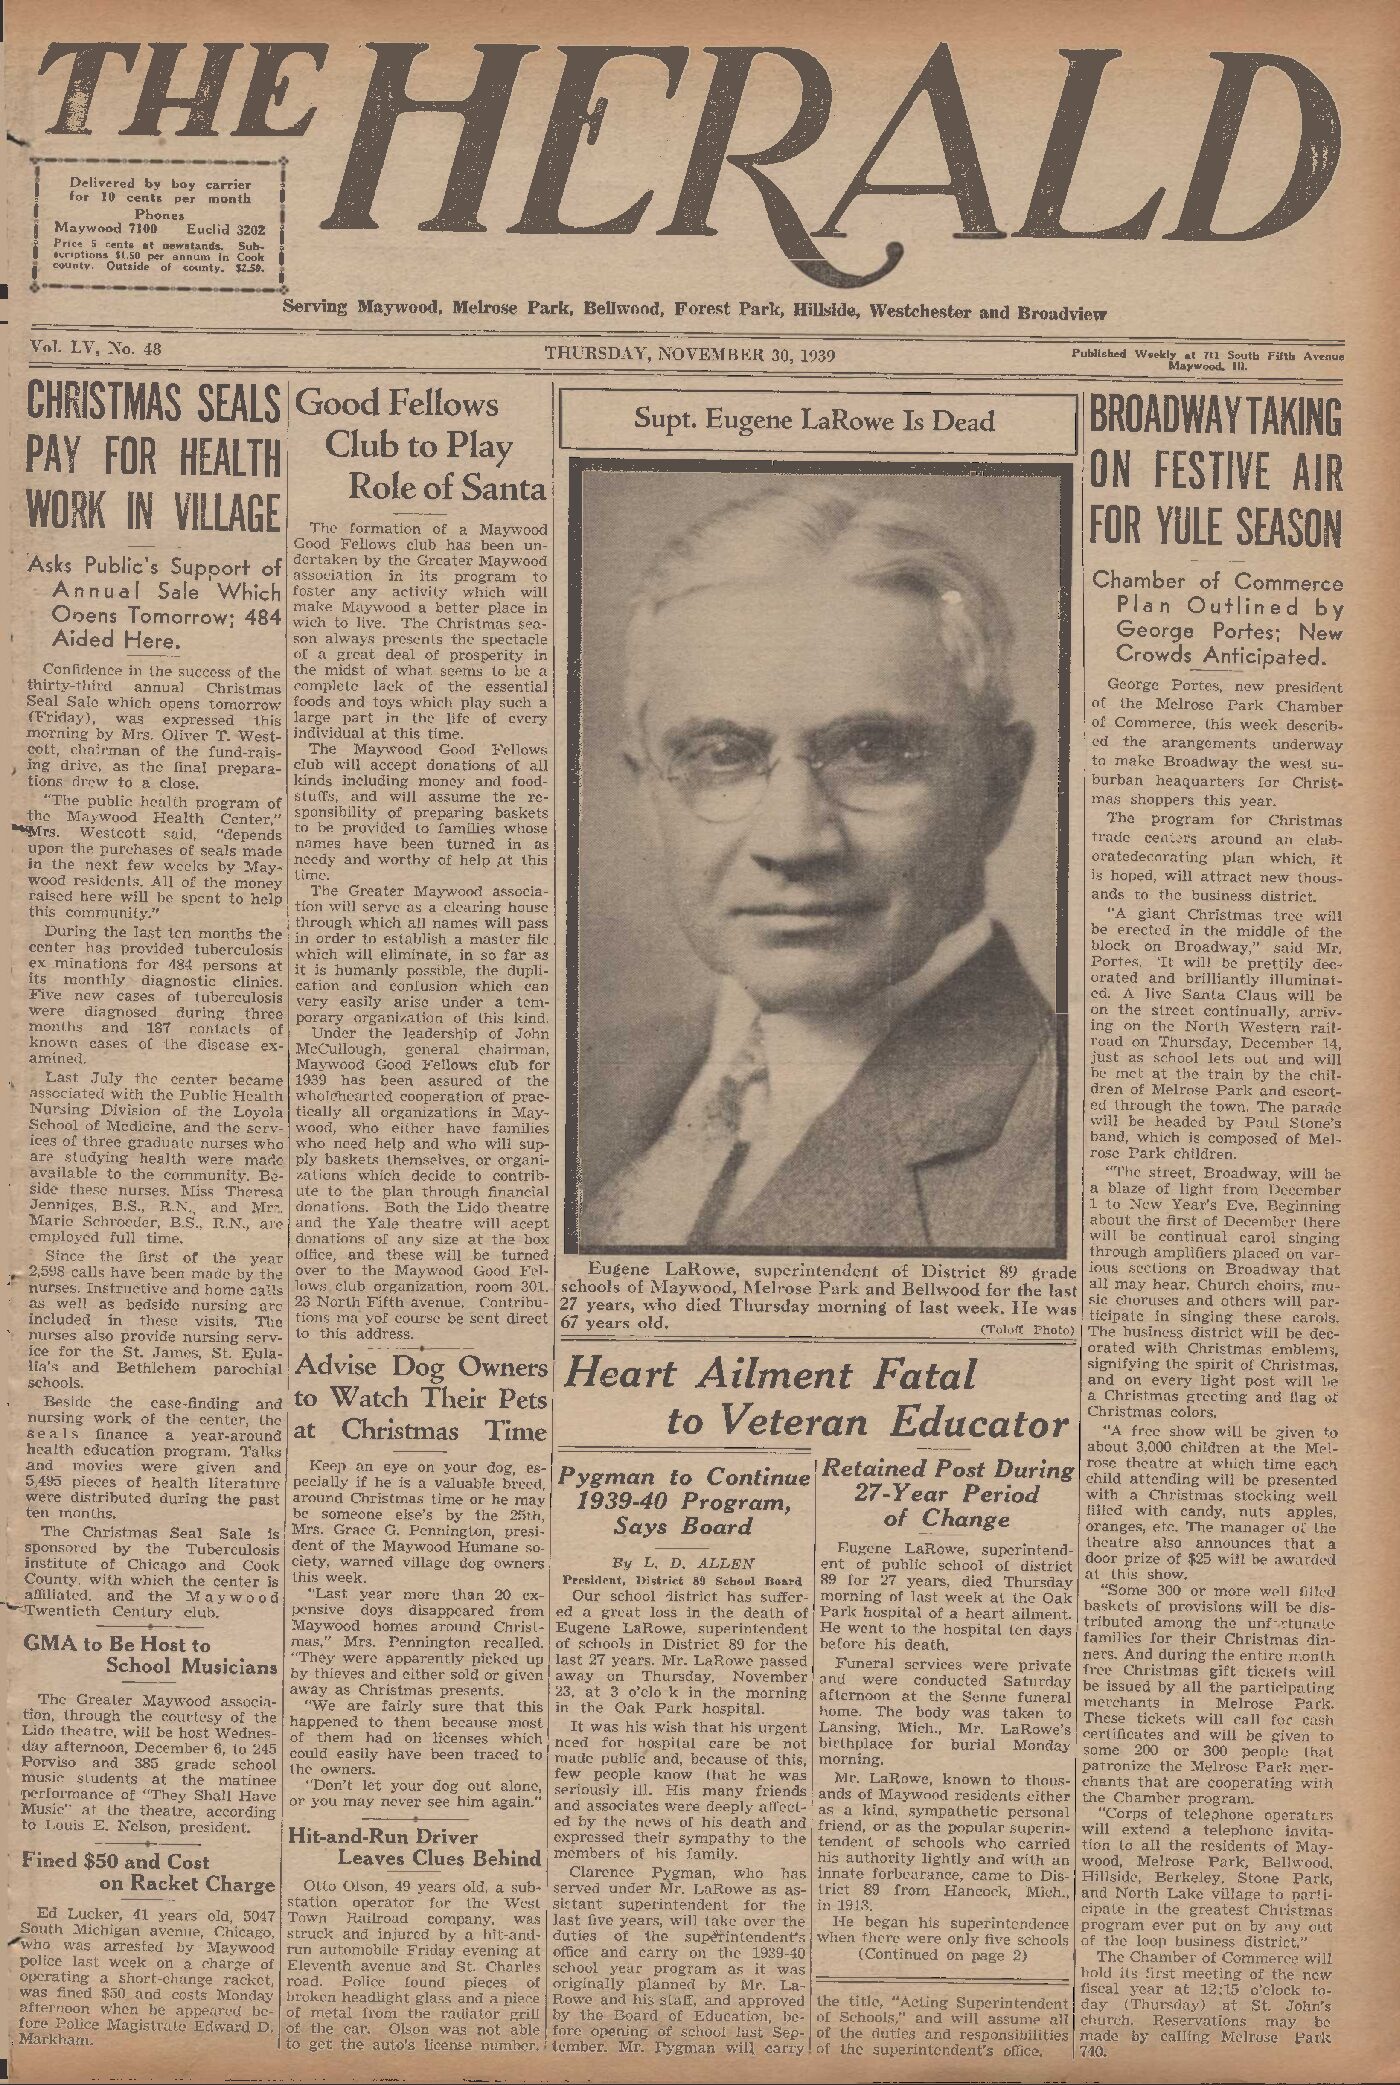 The Herald – 19391130